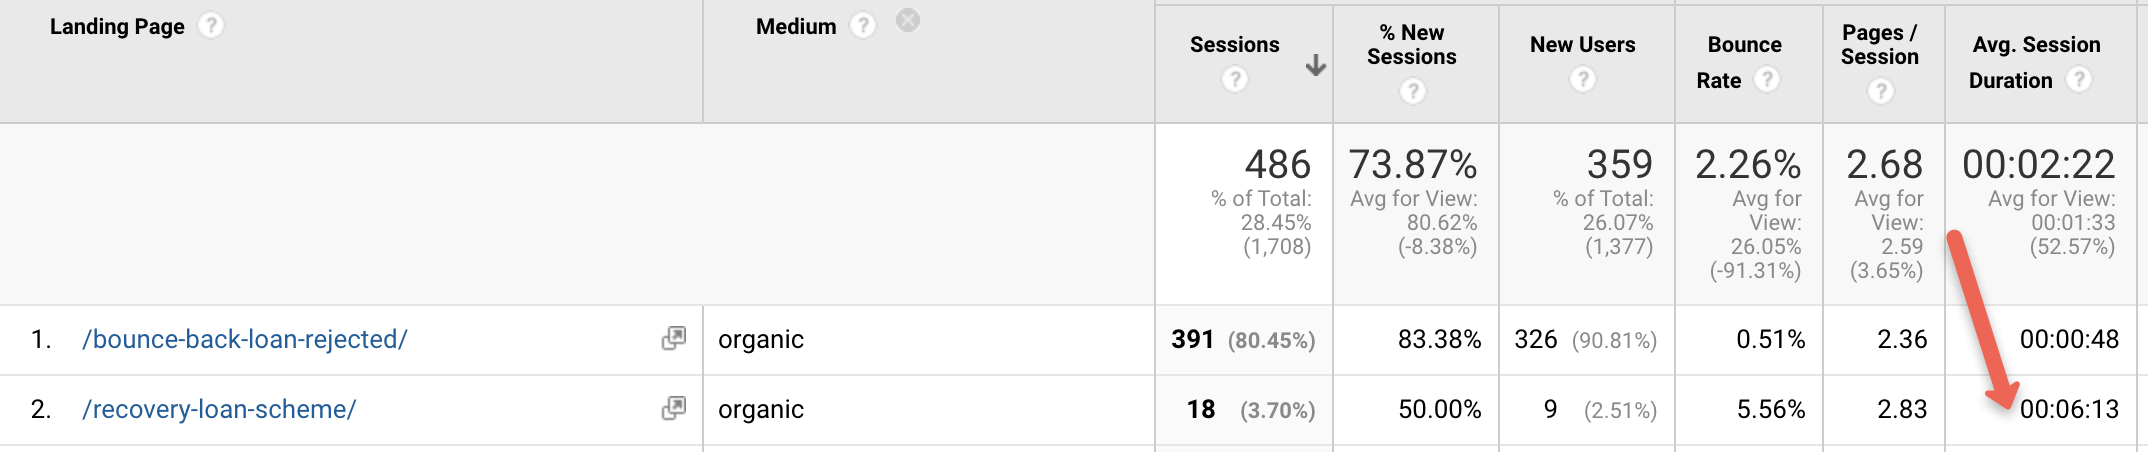 Google Analytics Average Session Duration